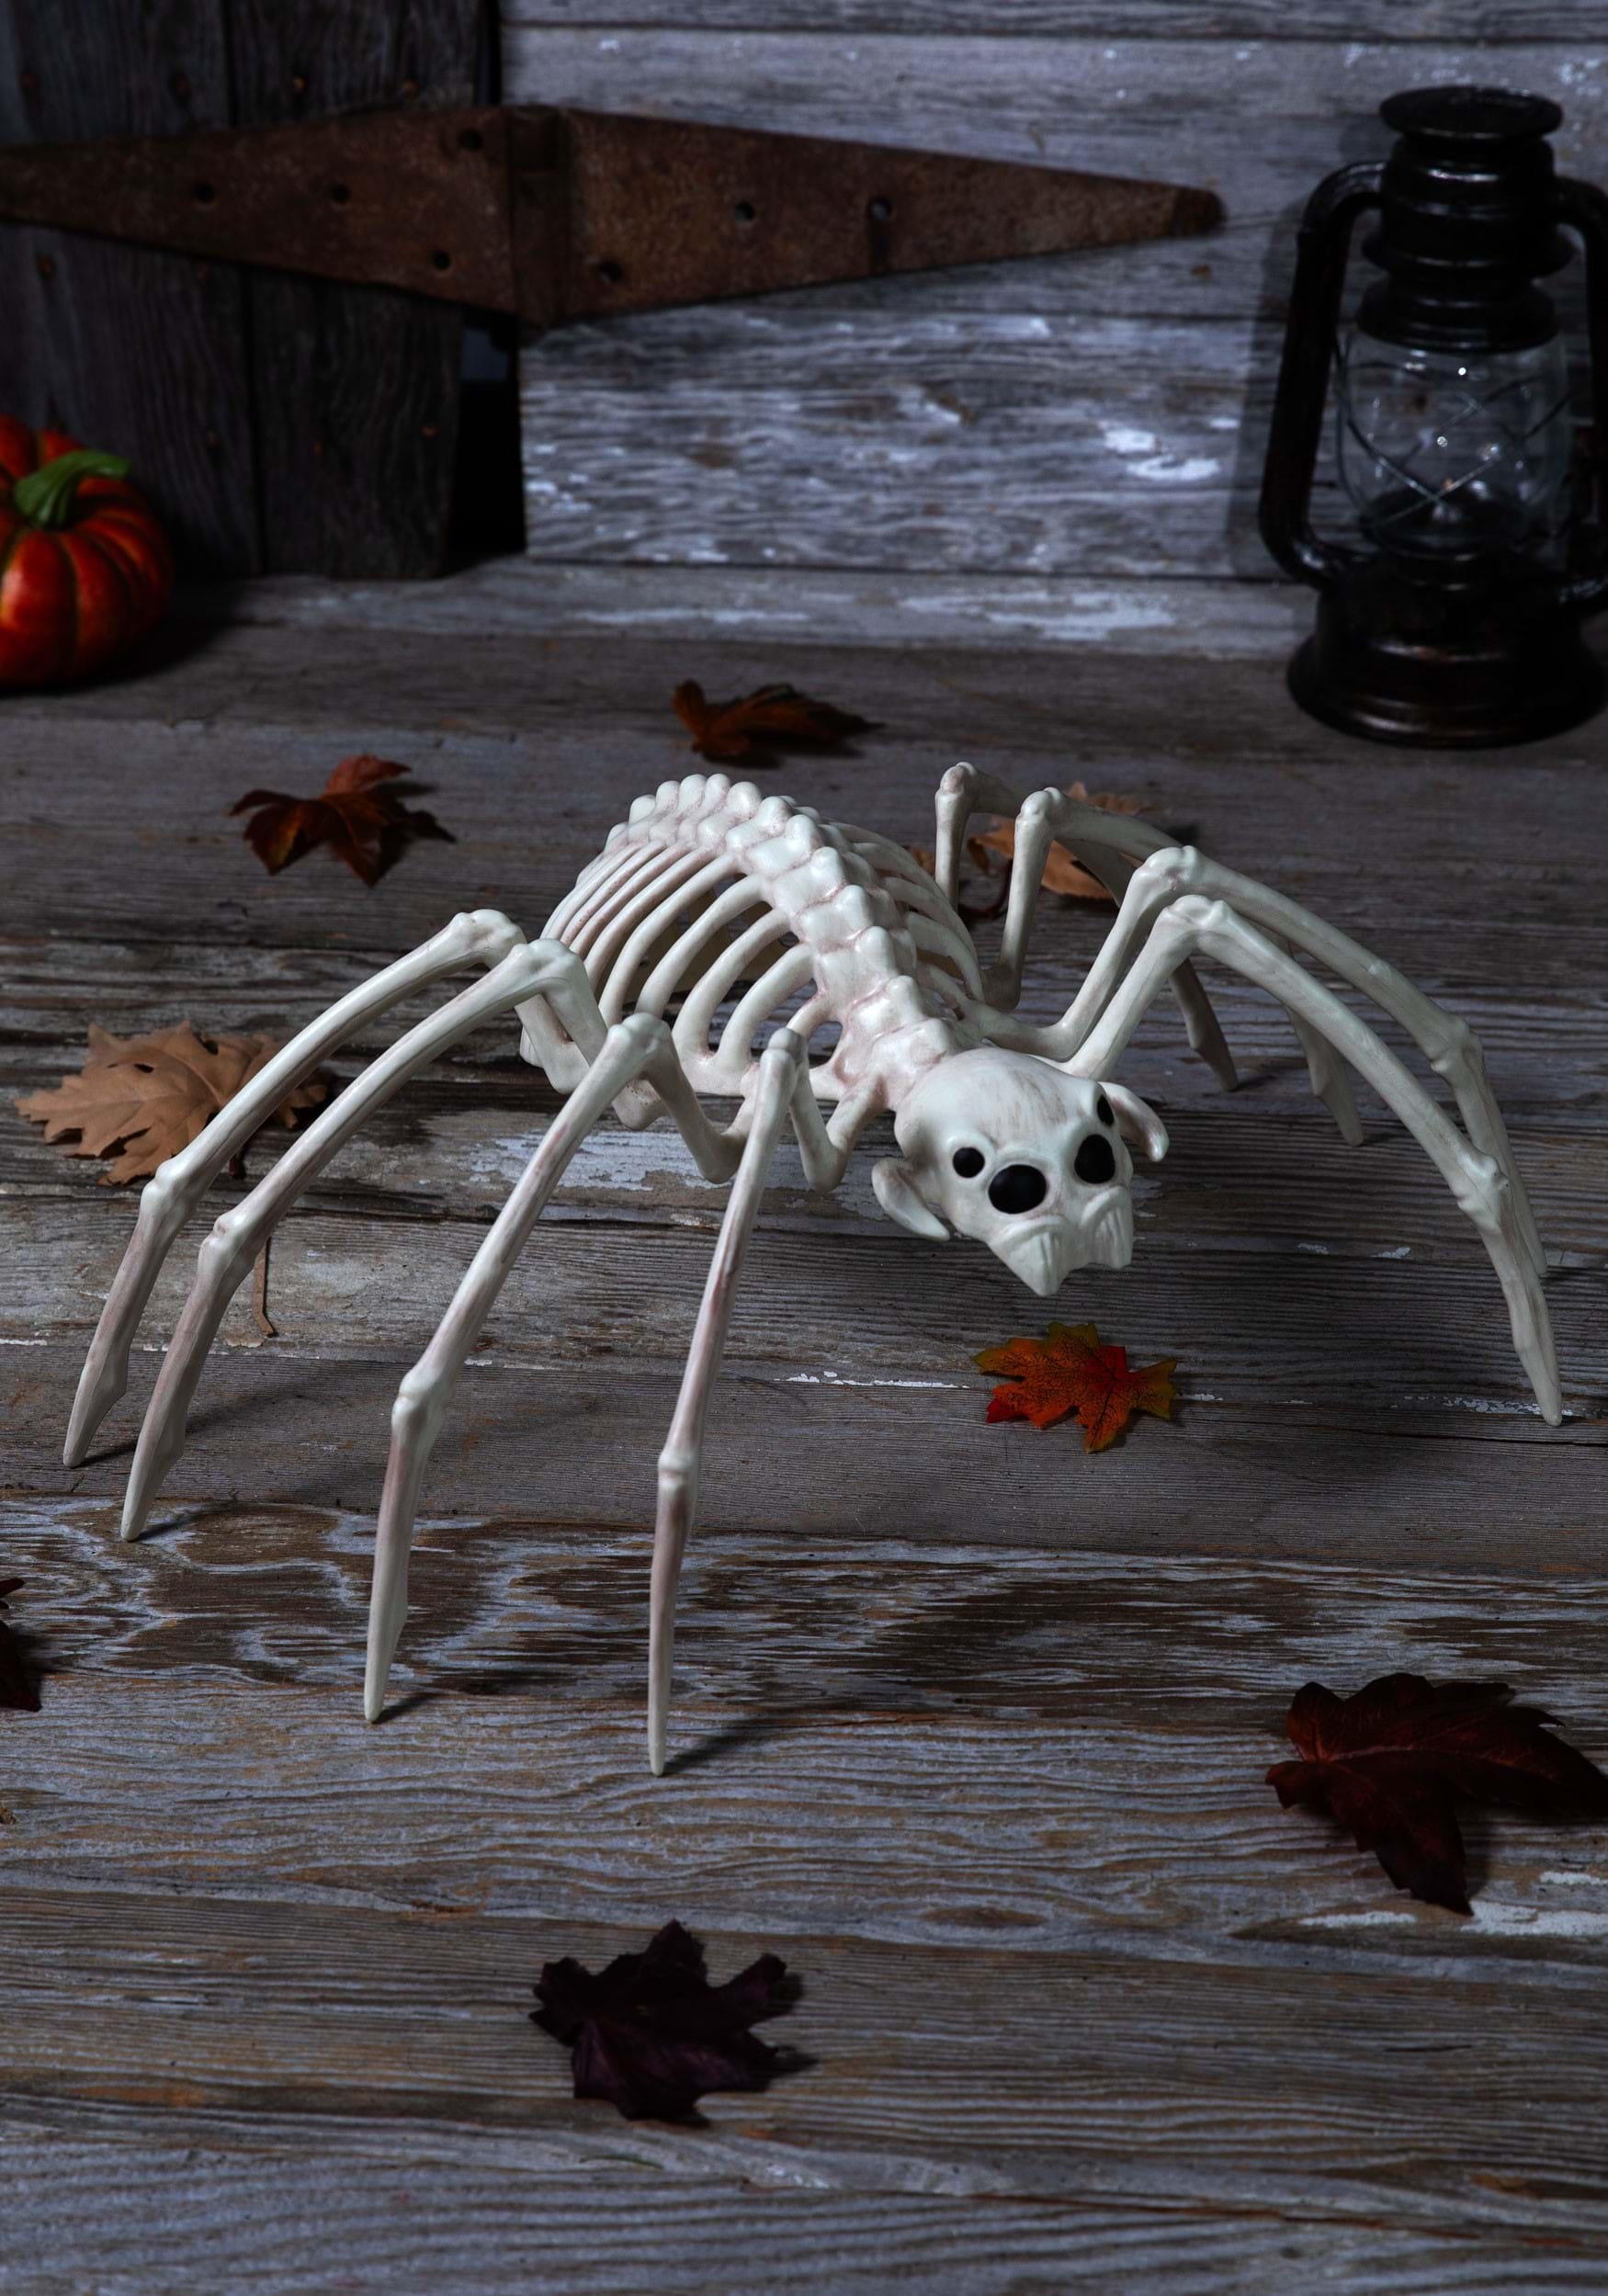 20-Inch Spider Skeleton Halloween Prop , Animal Skeleton Decorations